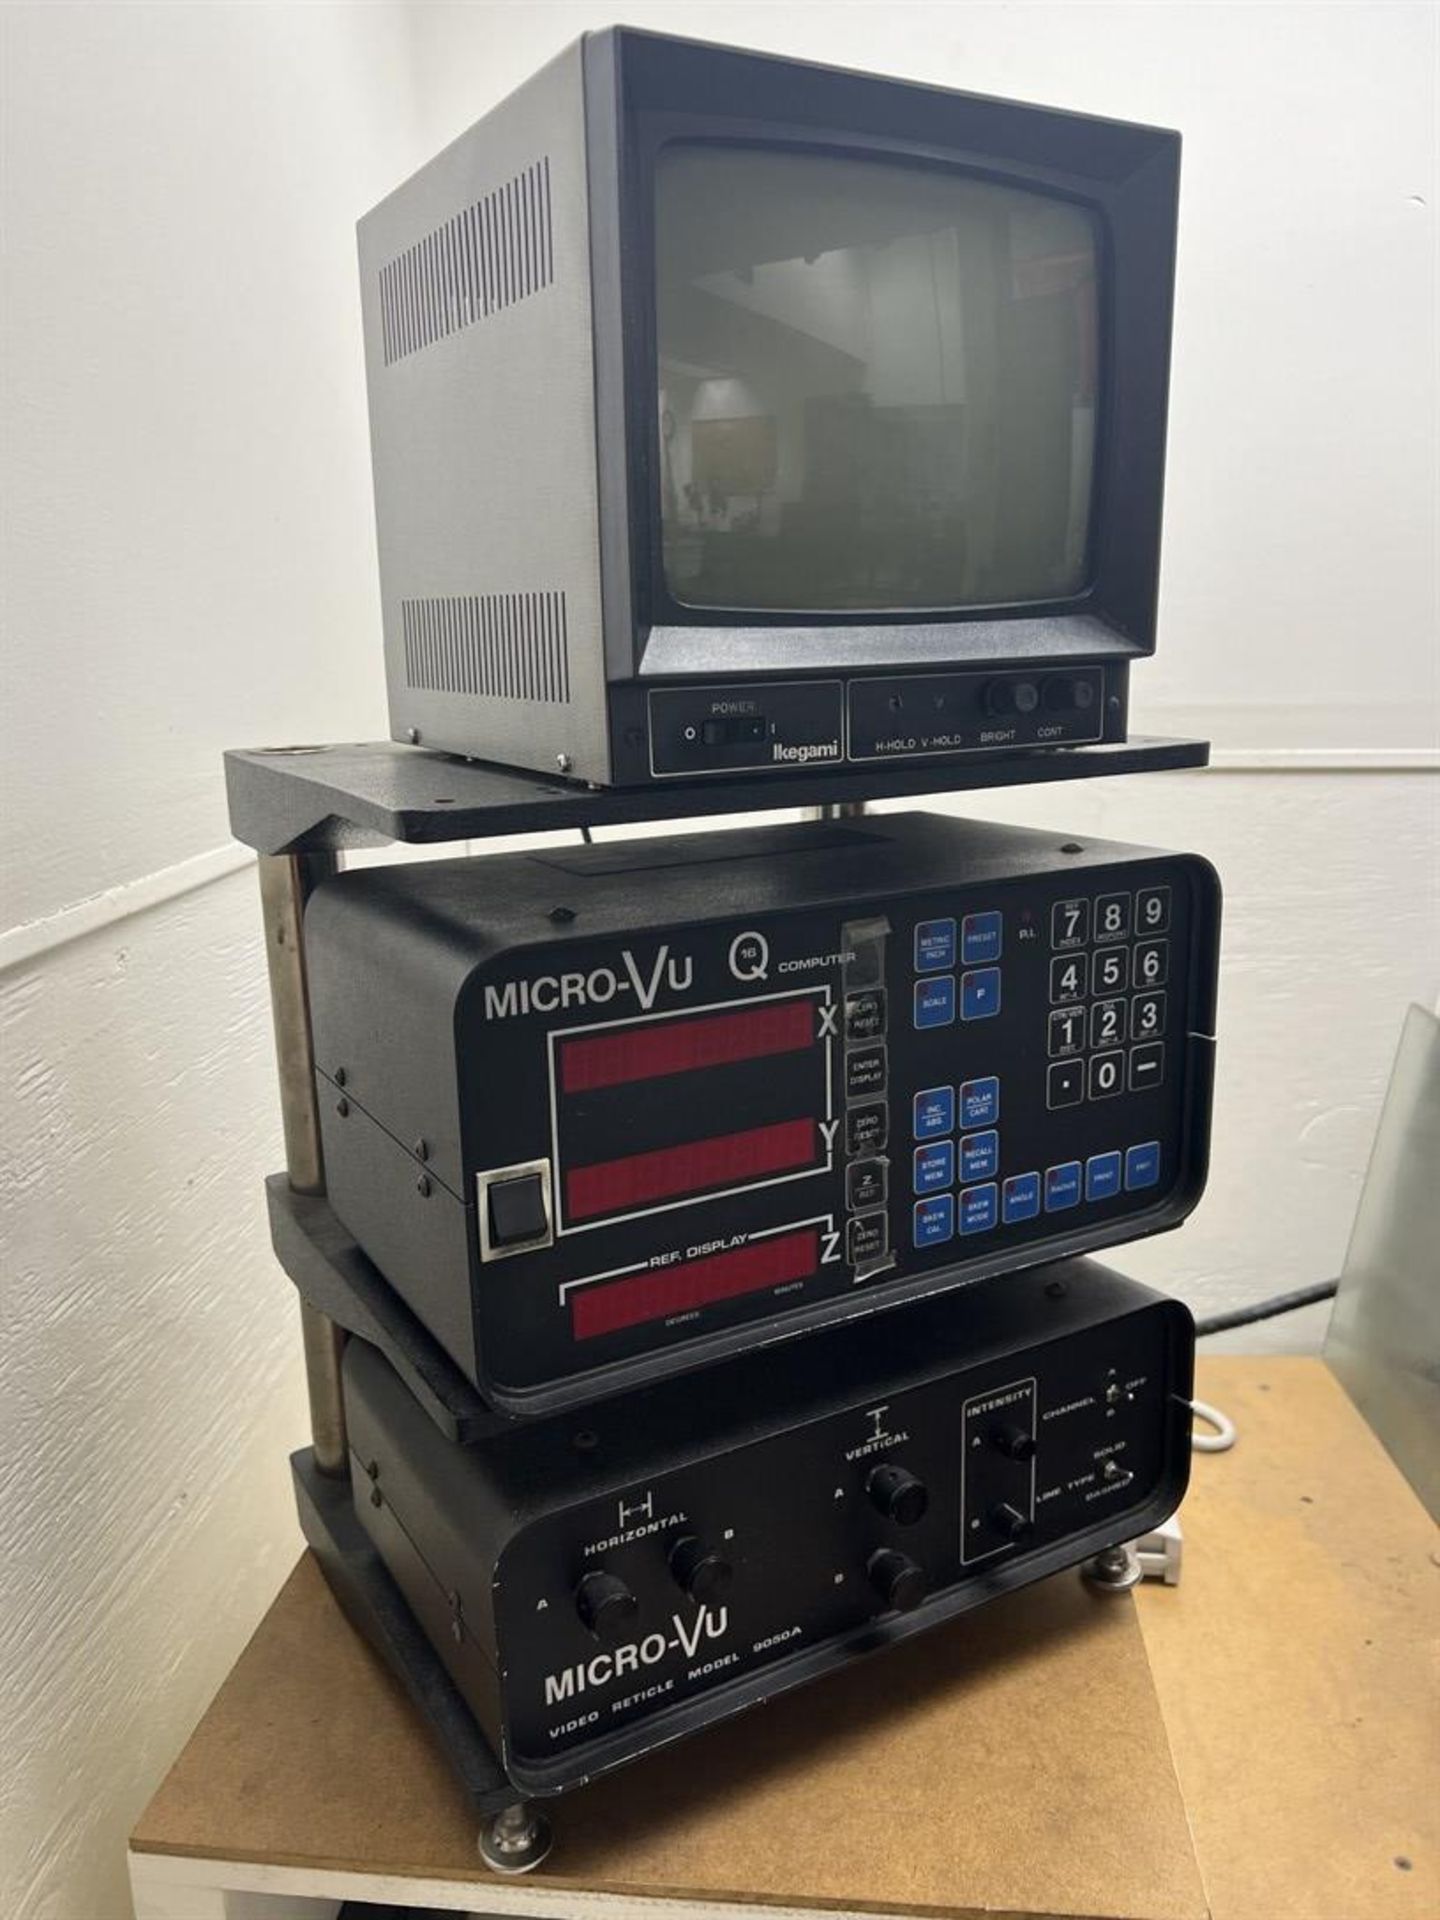 MICRO VU 14”x 14” Video Measuring Machine, s/n na, Mod 9050A Video Reticle, 3 Axis DRO - Image 6 of 9